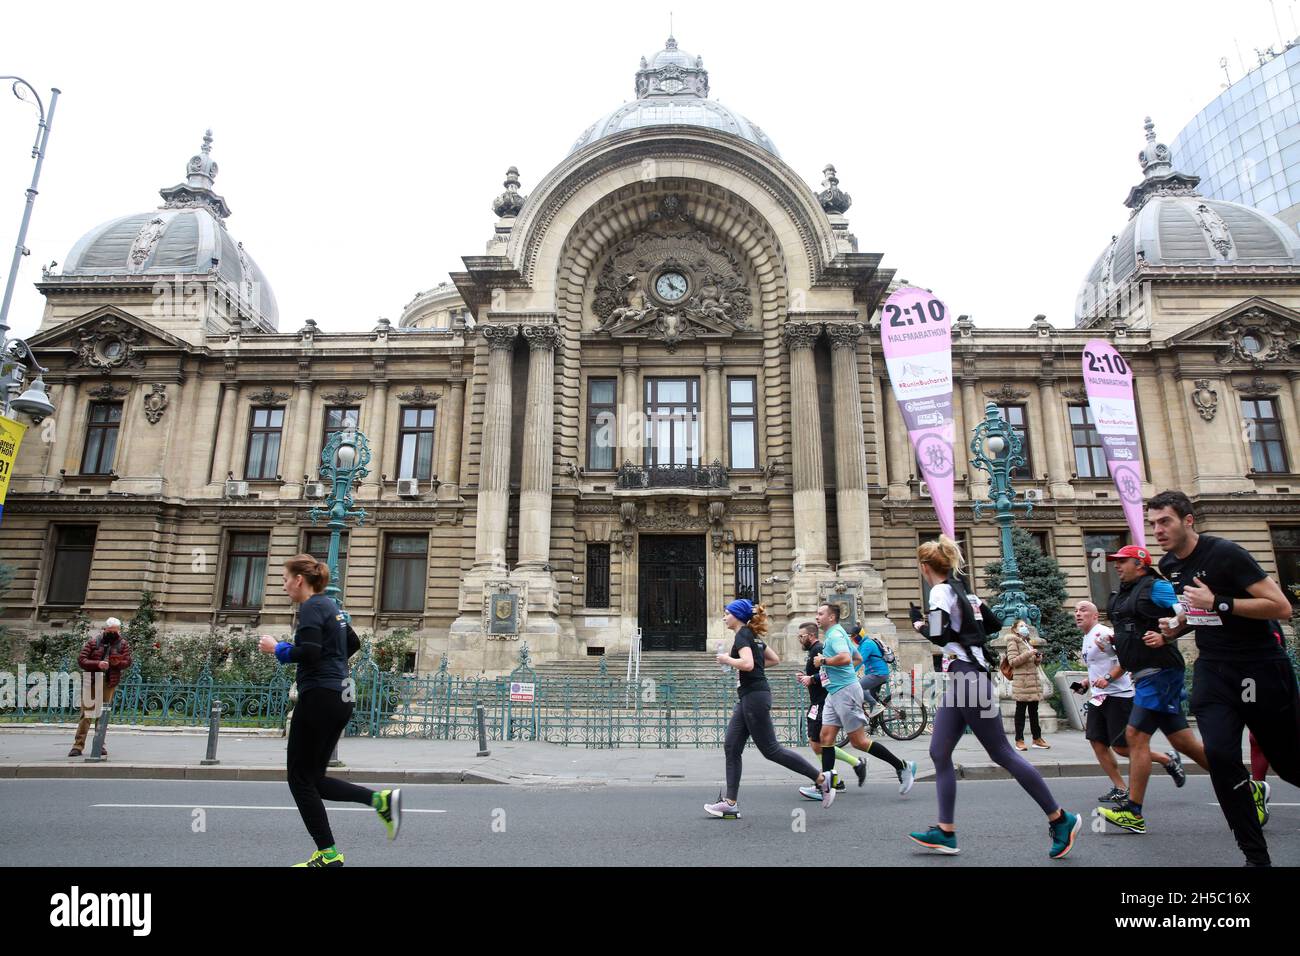 BUKAREST, RUMÄNIEN - 31. Oktober 2021: Athleten treten beim Bukarest-Marathon an. Stockfoto